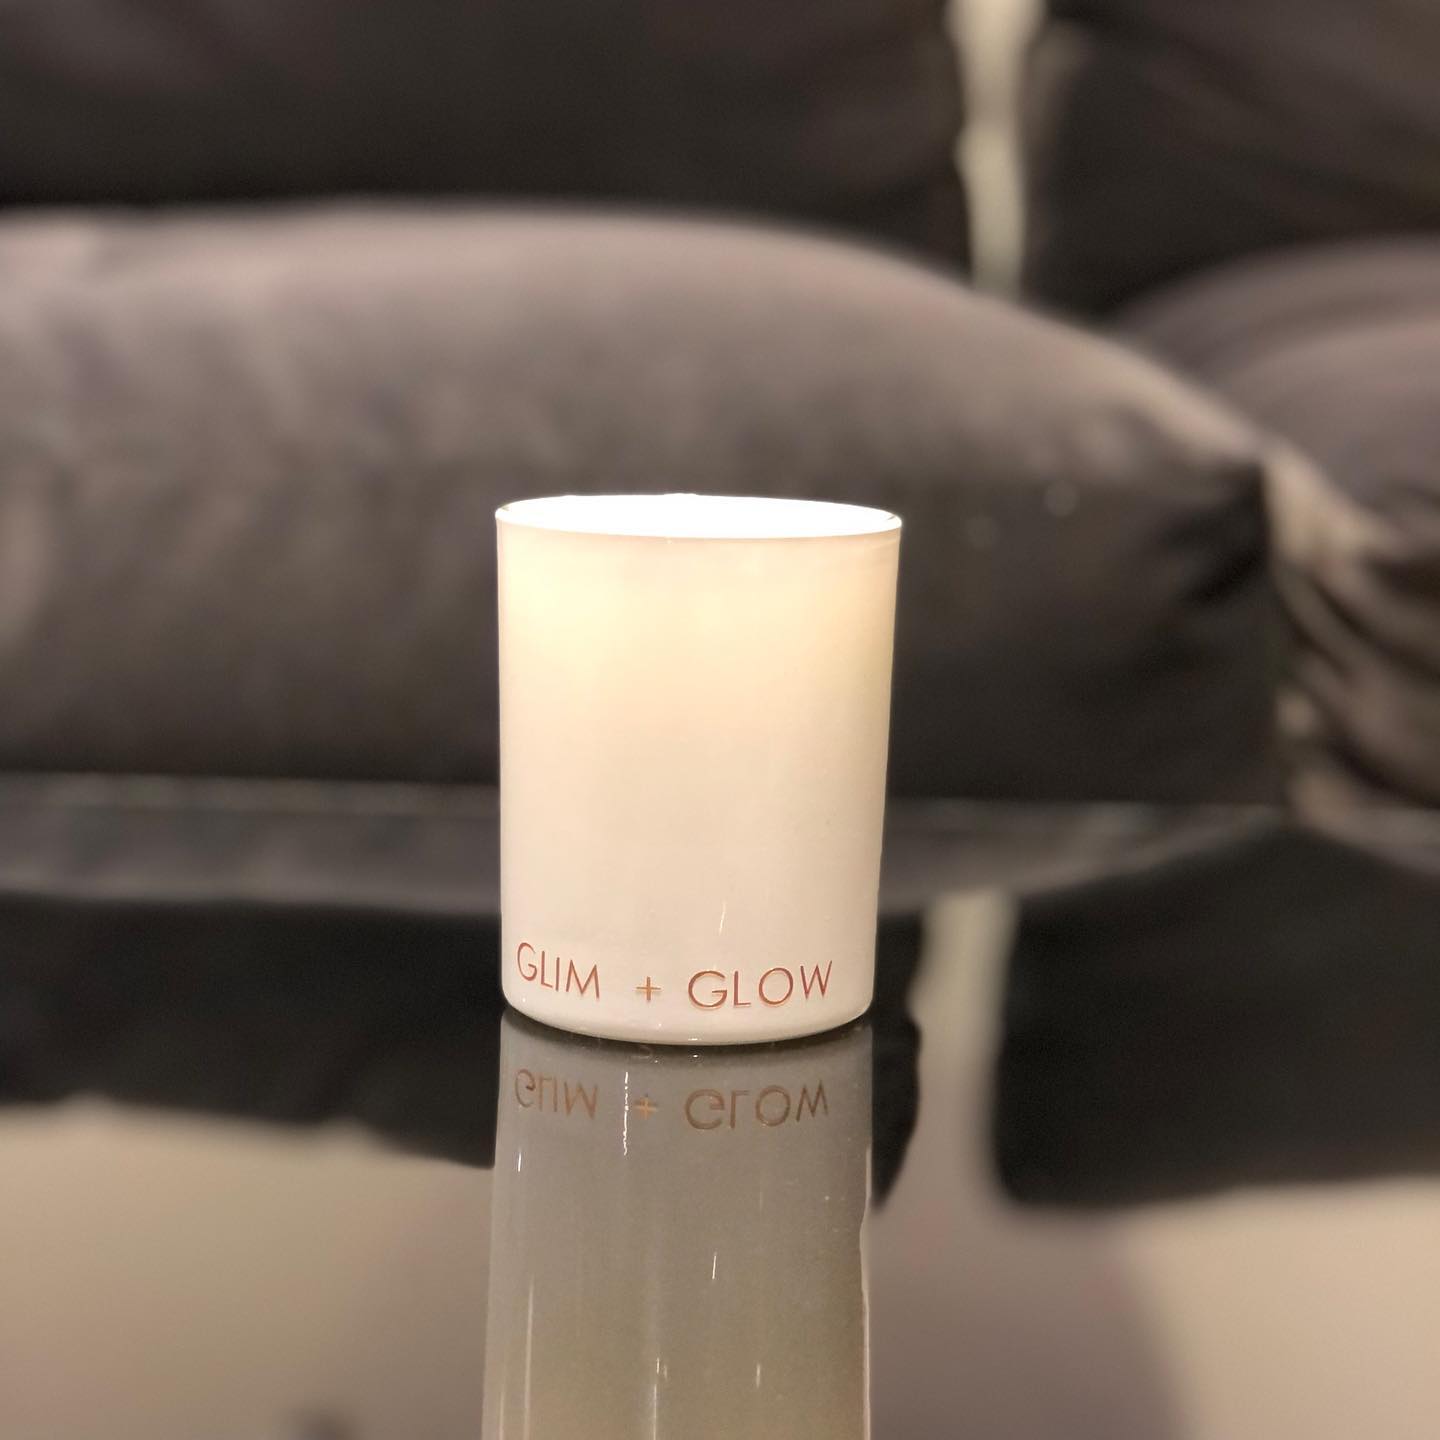 Glim and Glow